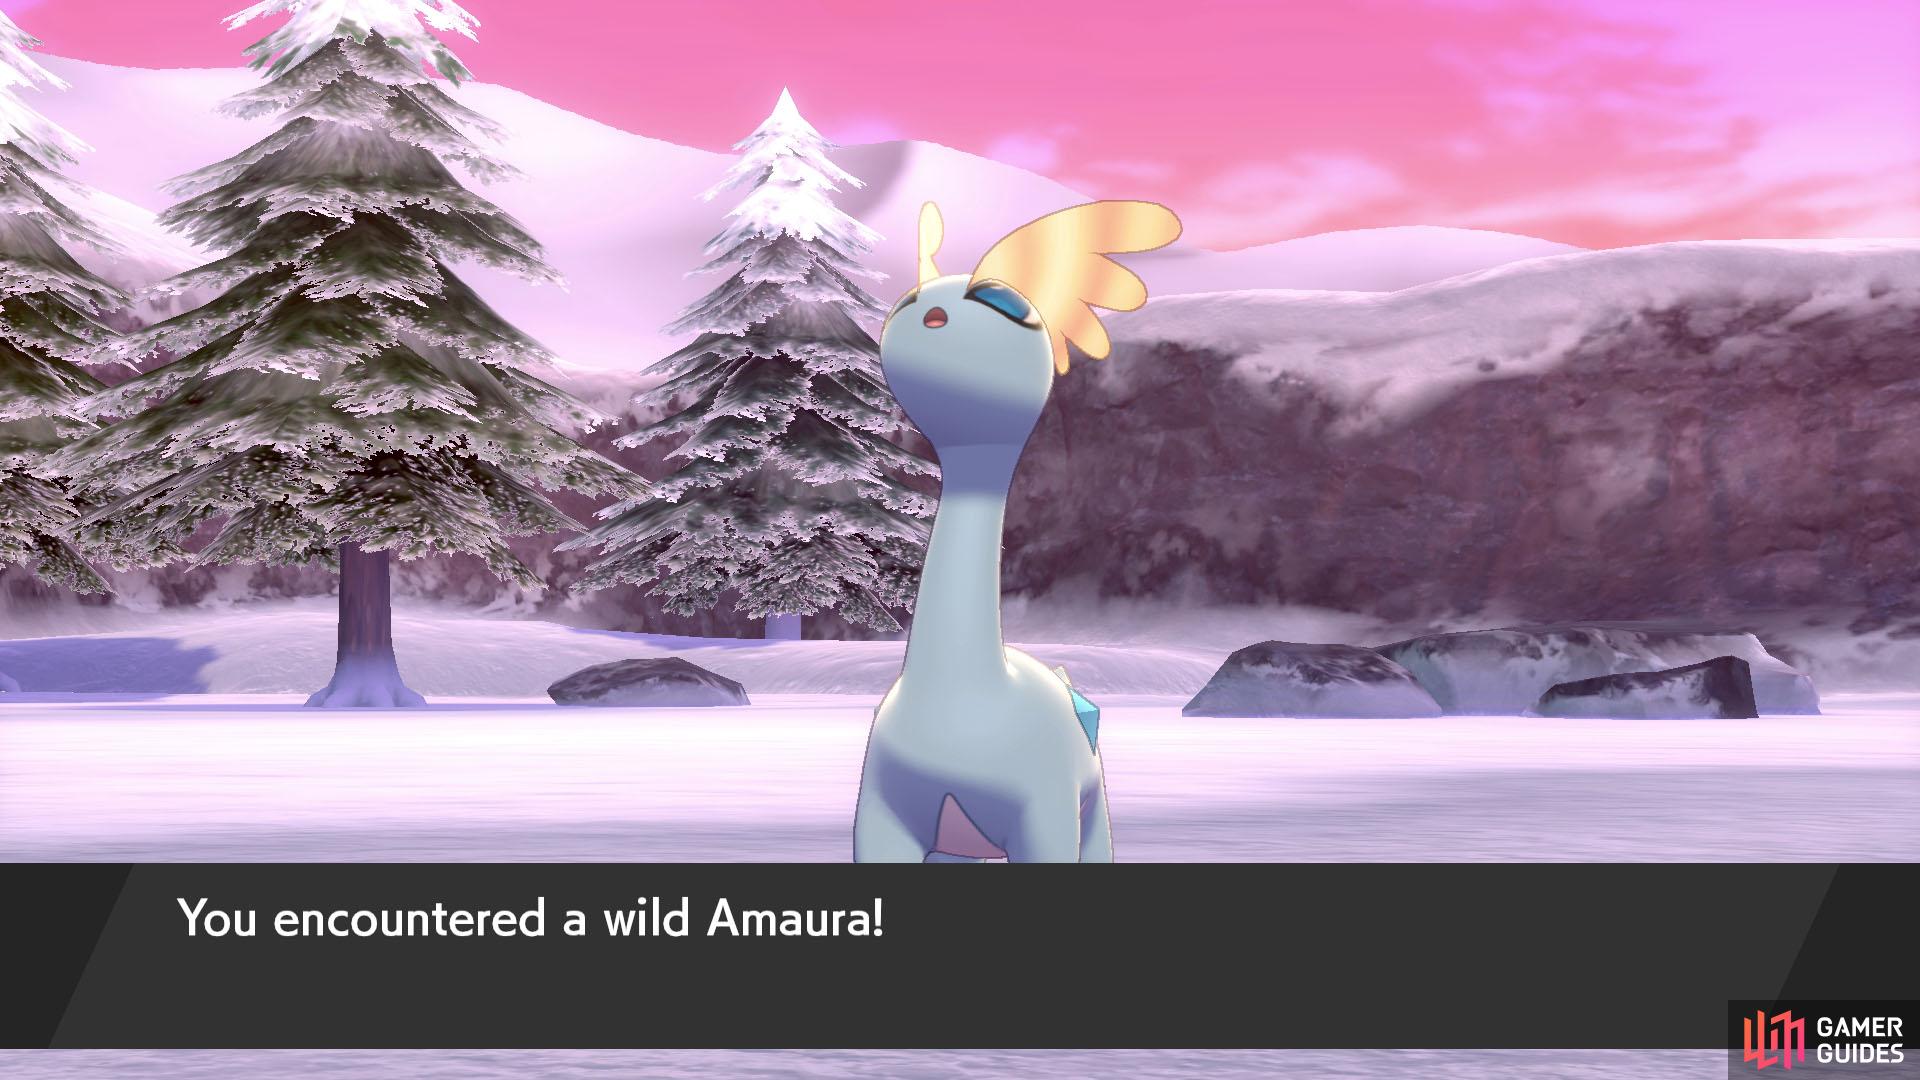 Amaura is a fossil Pokémon from the Kalos region.